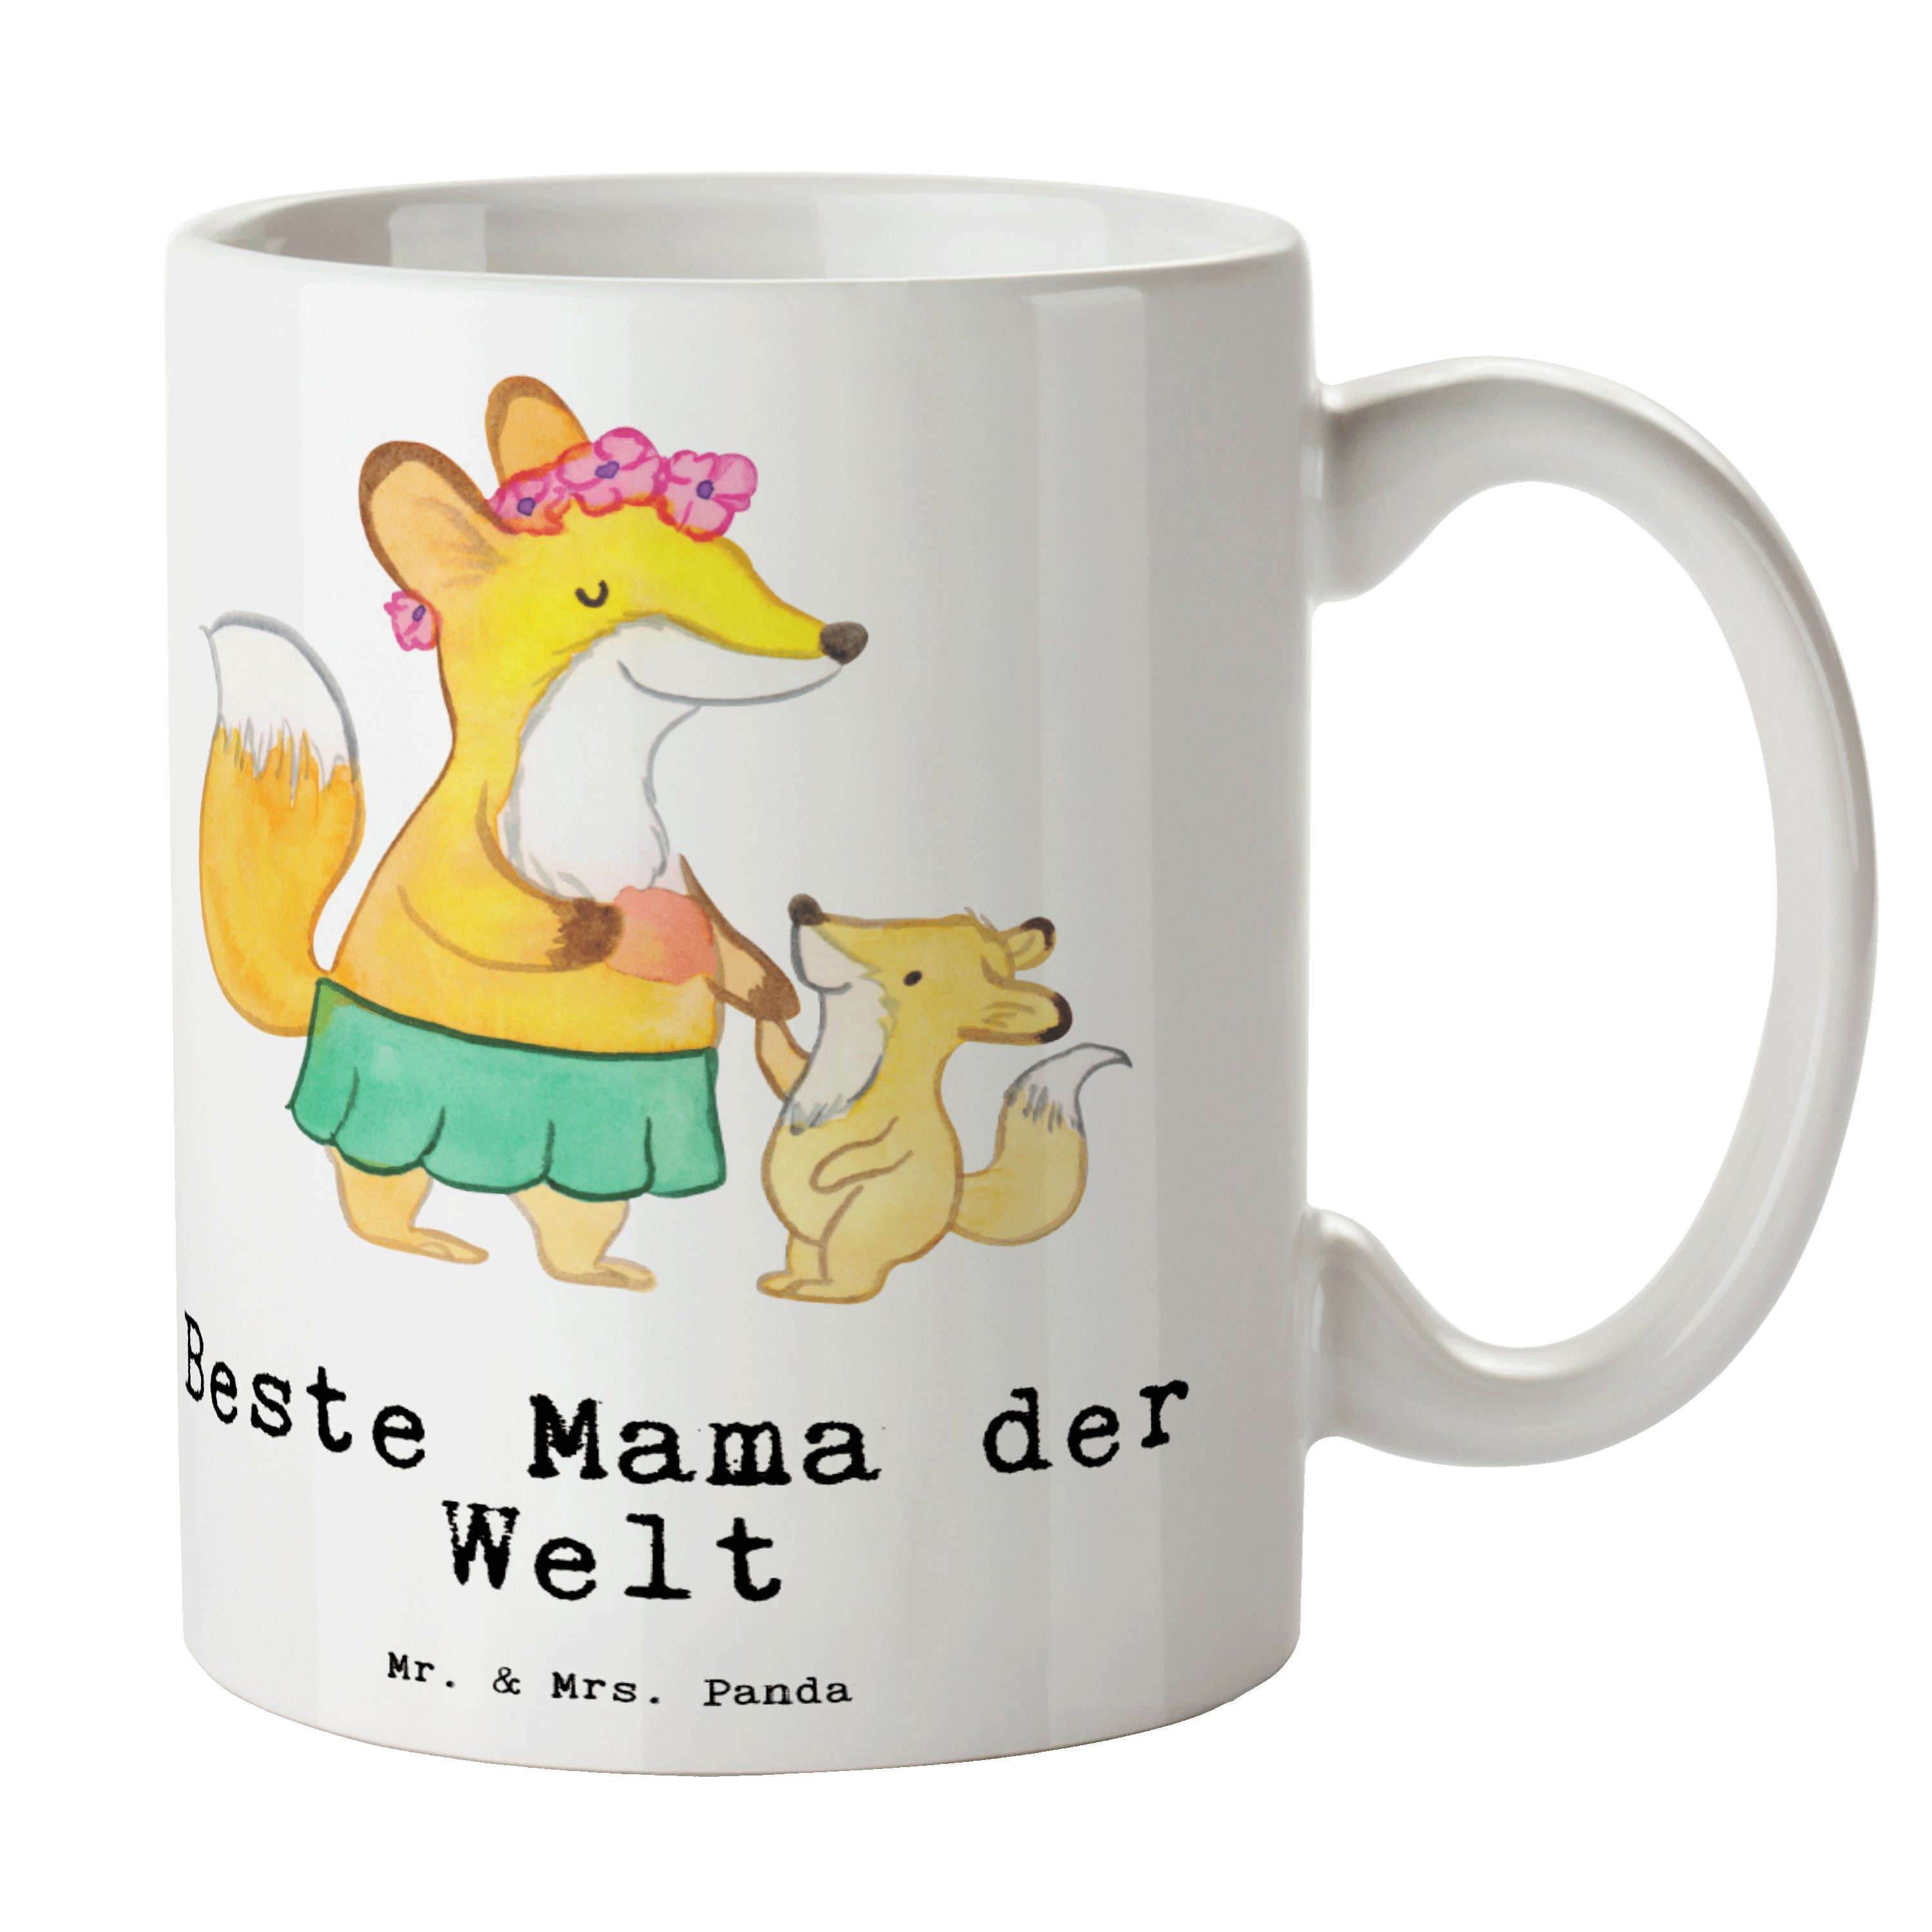 Mr. & Mrs. Panda Tasse Fuchs Beste Mama der Welt - Weiß - Geschenk, für, Danke, Sohn, Büro, Kaffeebecher, Becher, Freude machen, Geburtstag, Tee, Kaffeetasse, Geschenkidee, Keramik